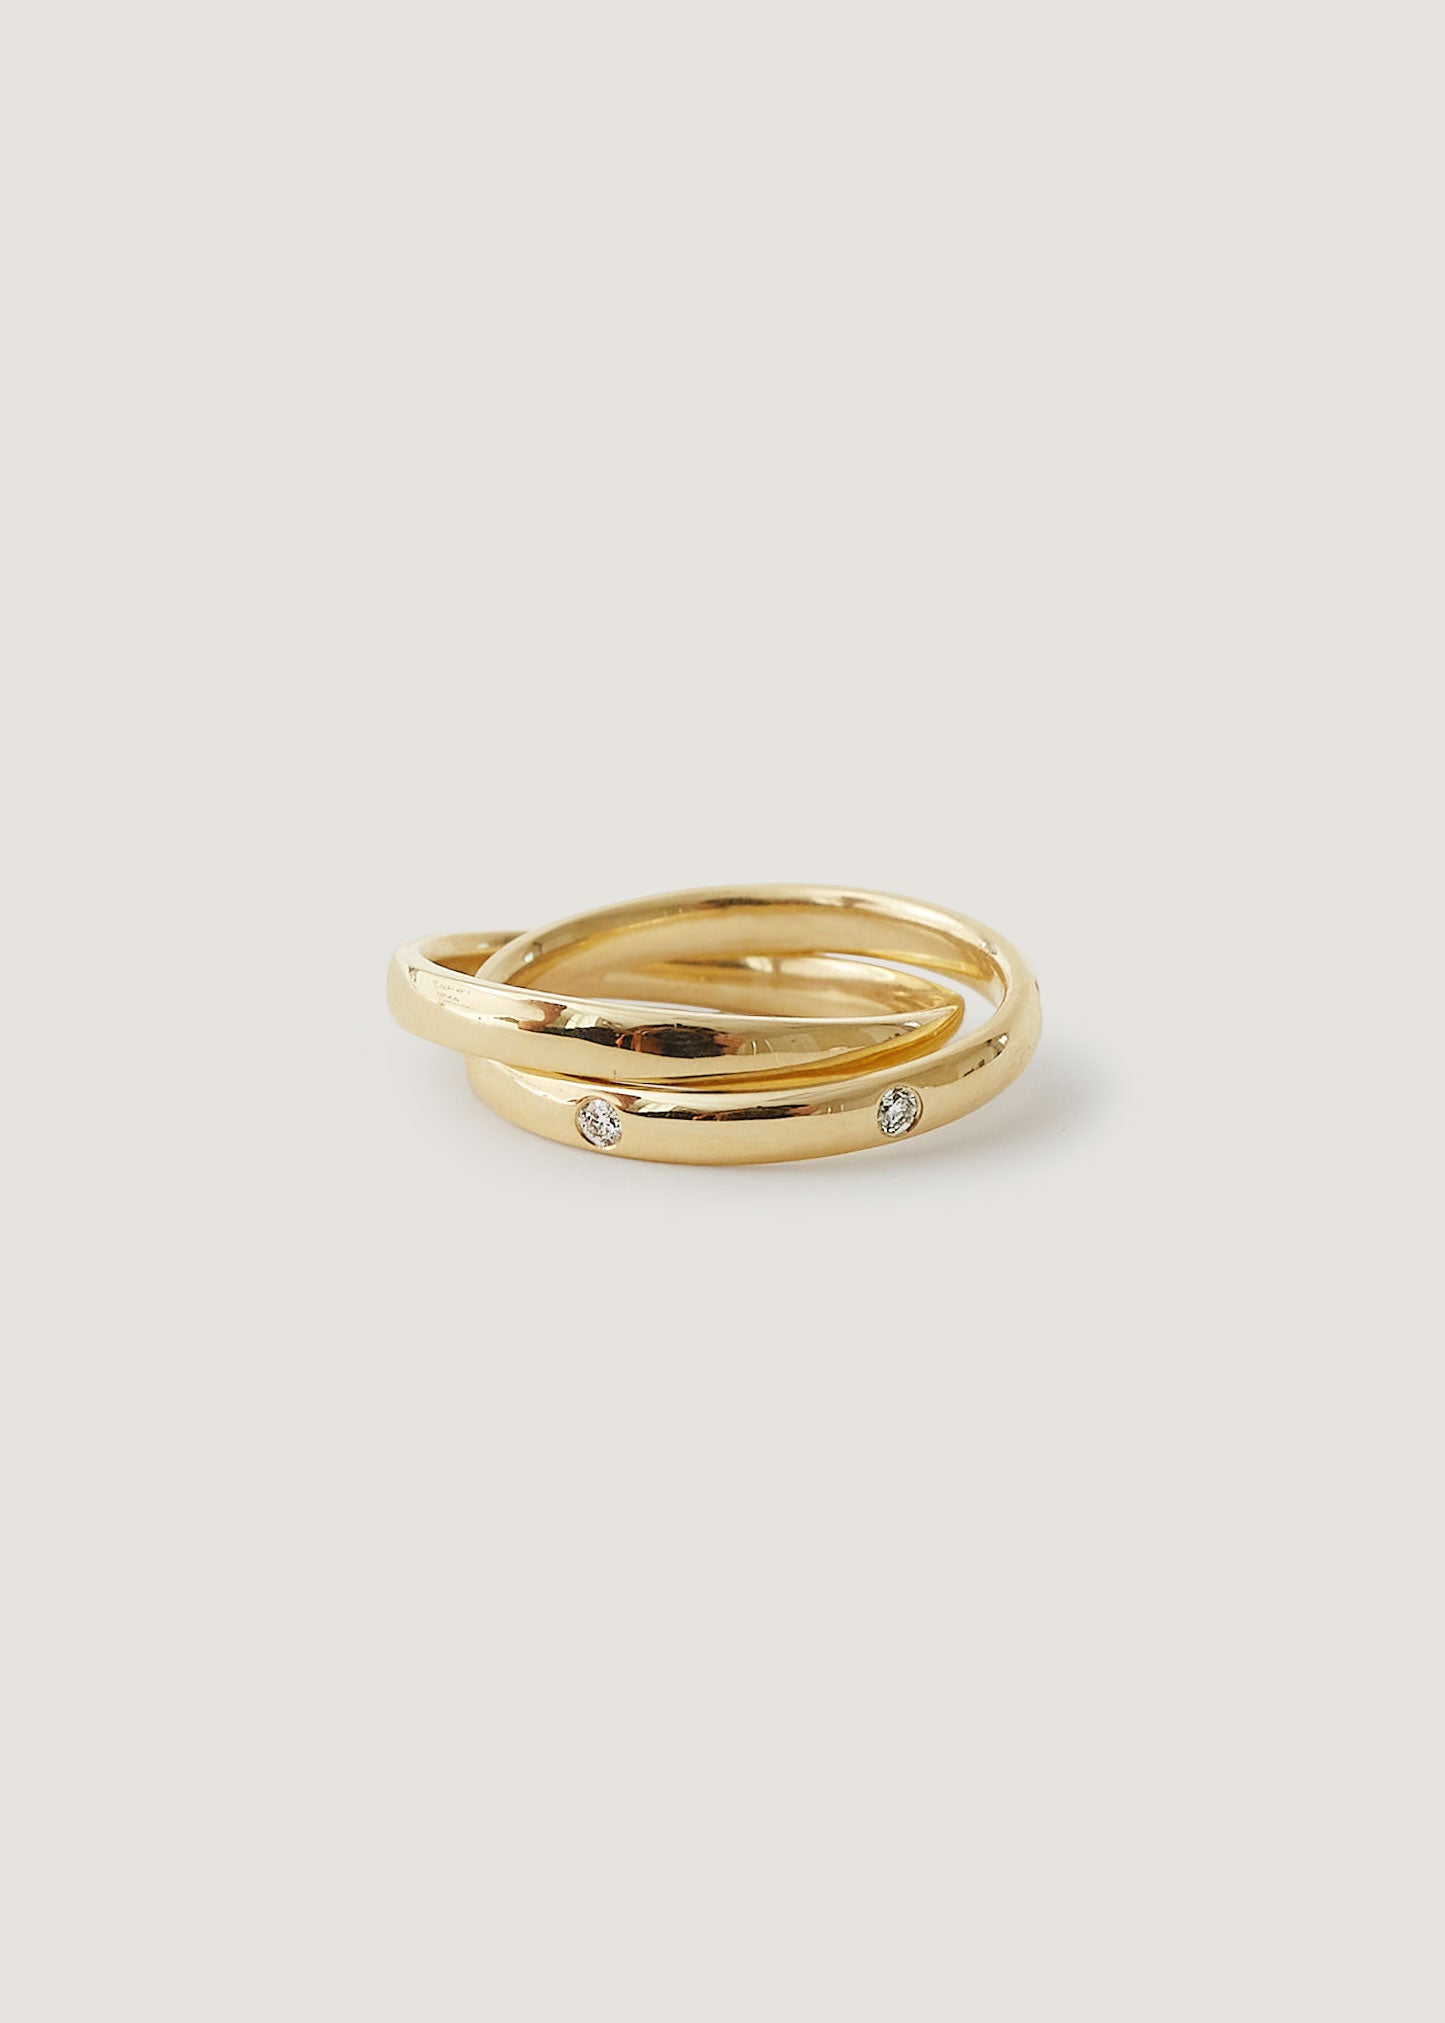 L'Amour Interlocking Ring Gold